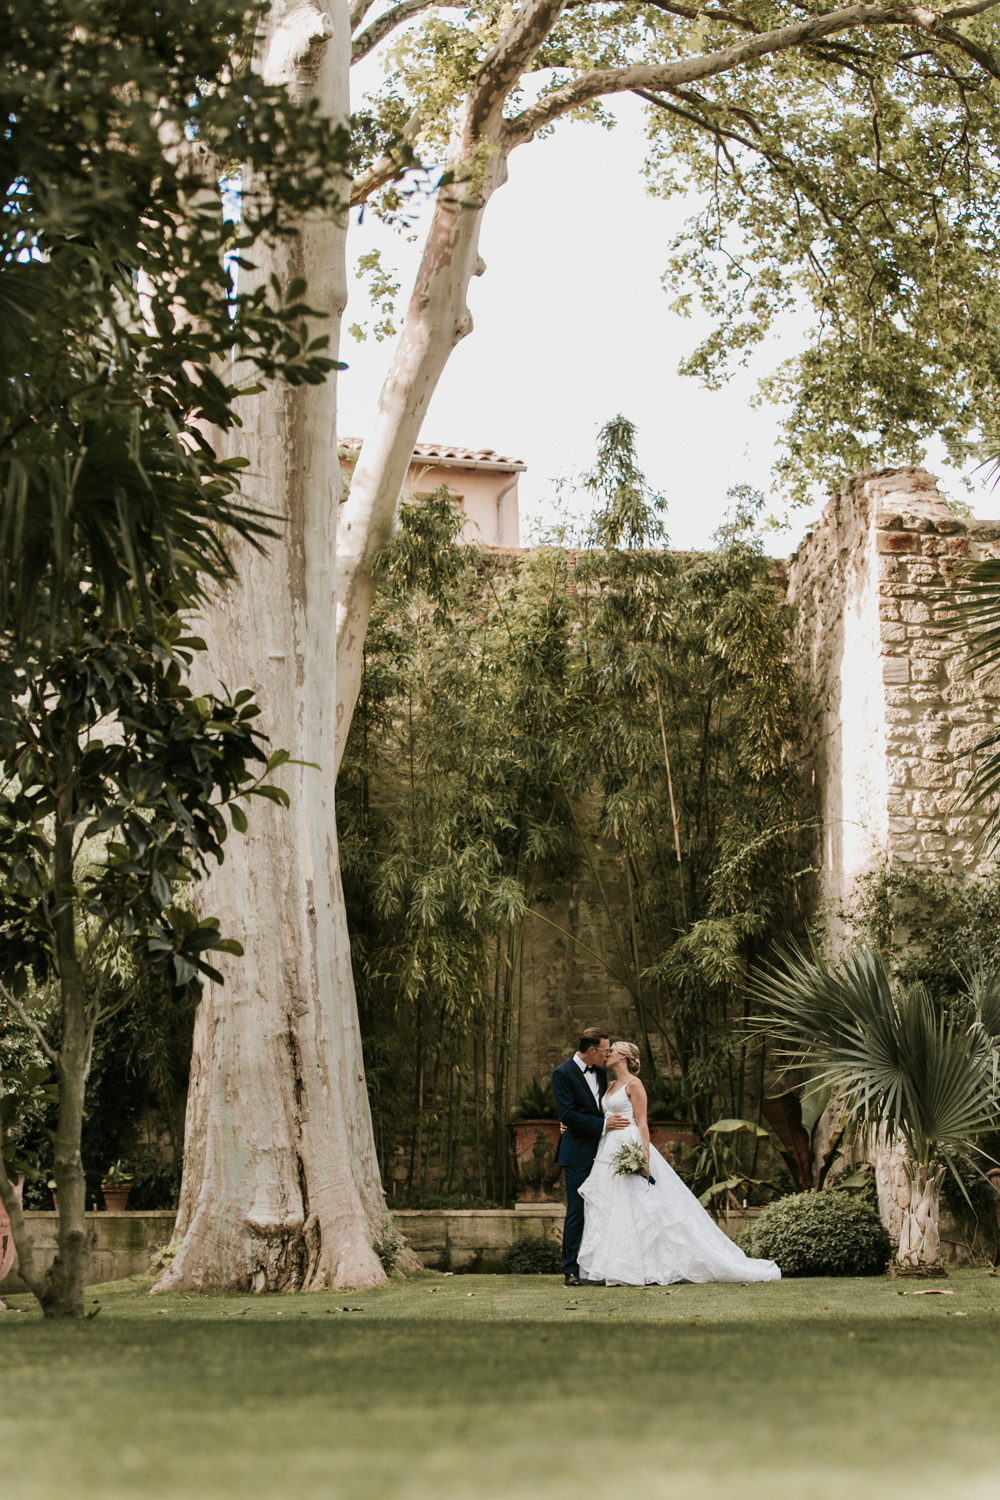 Photographe de mariage en Provence à Avignon